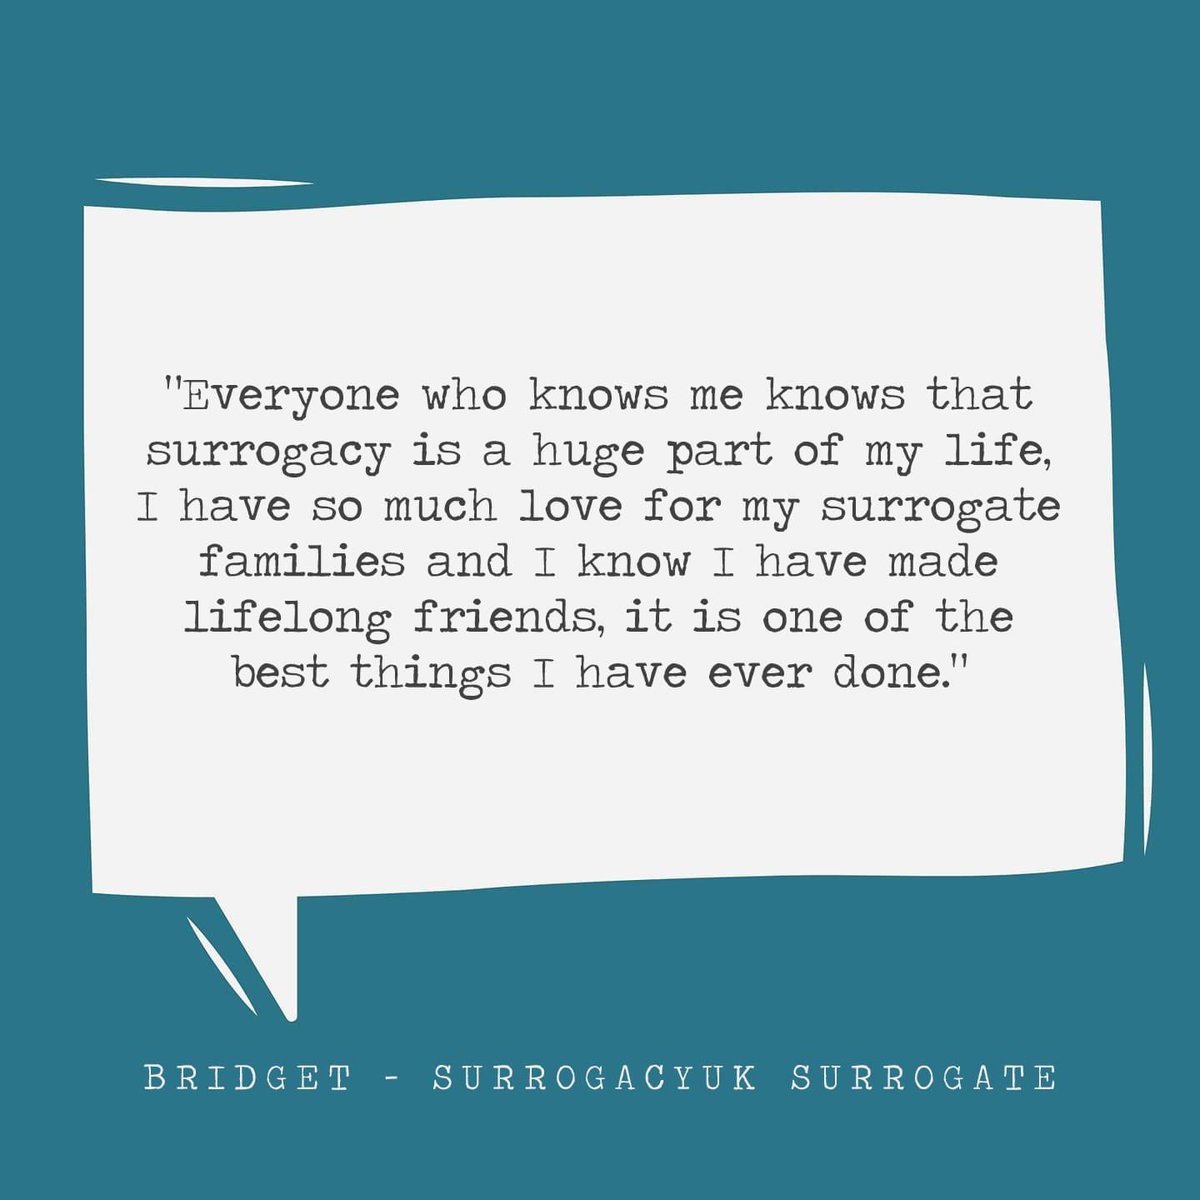 Friendship First at SurrogacyUK 
#surrogacyocks #uksurrogacy #surrogacyuk #surrosisters